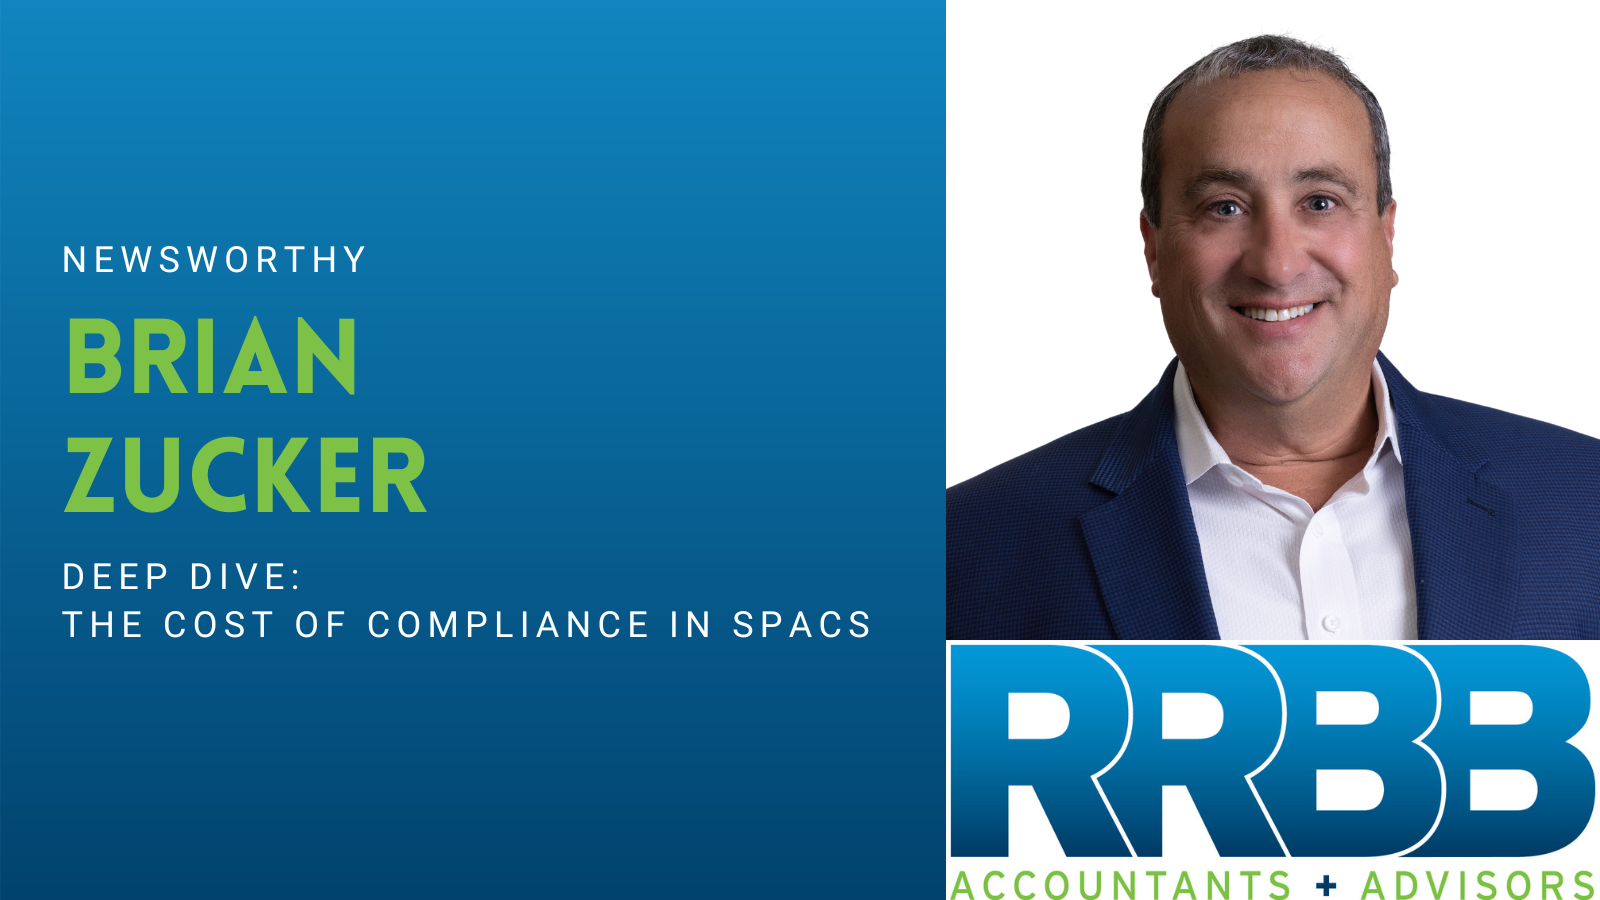 Brian Zucker Speaks on the Cost of Compliance in SPACs